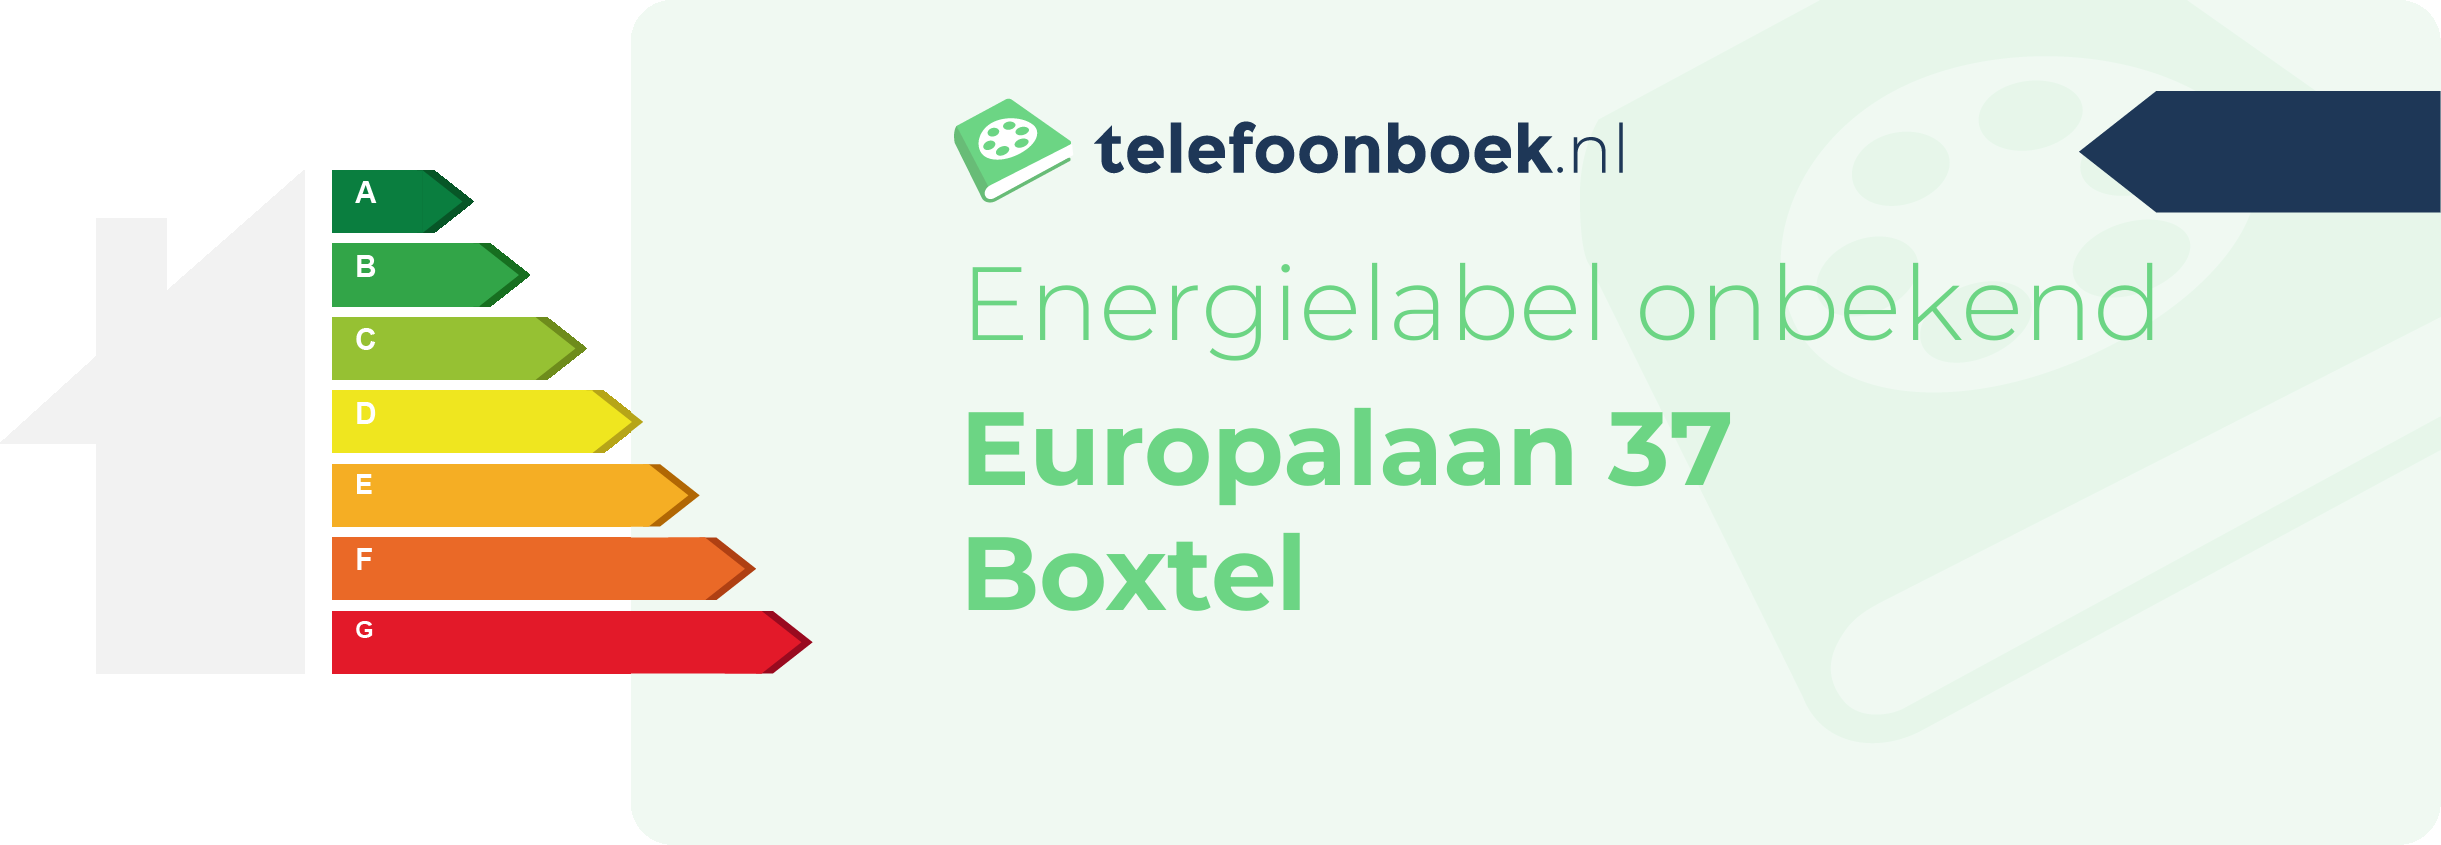 Energielabel Europalaan 37 Boxtel